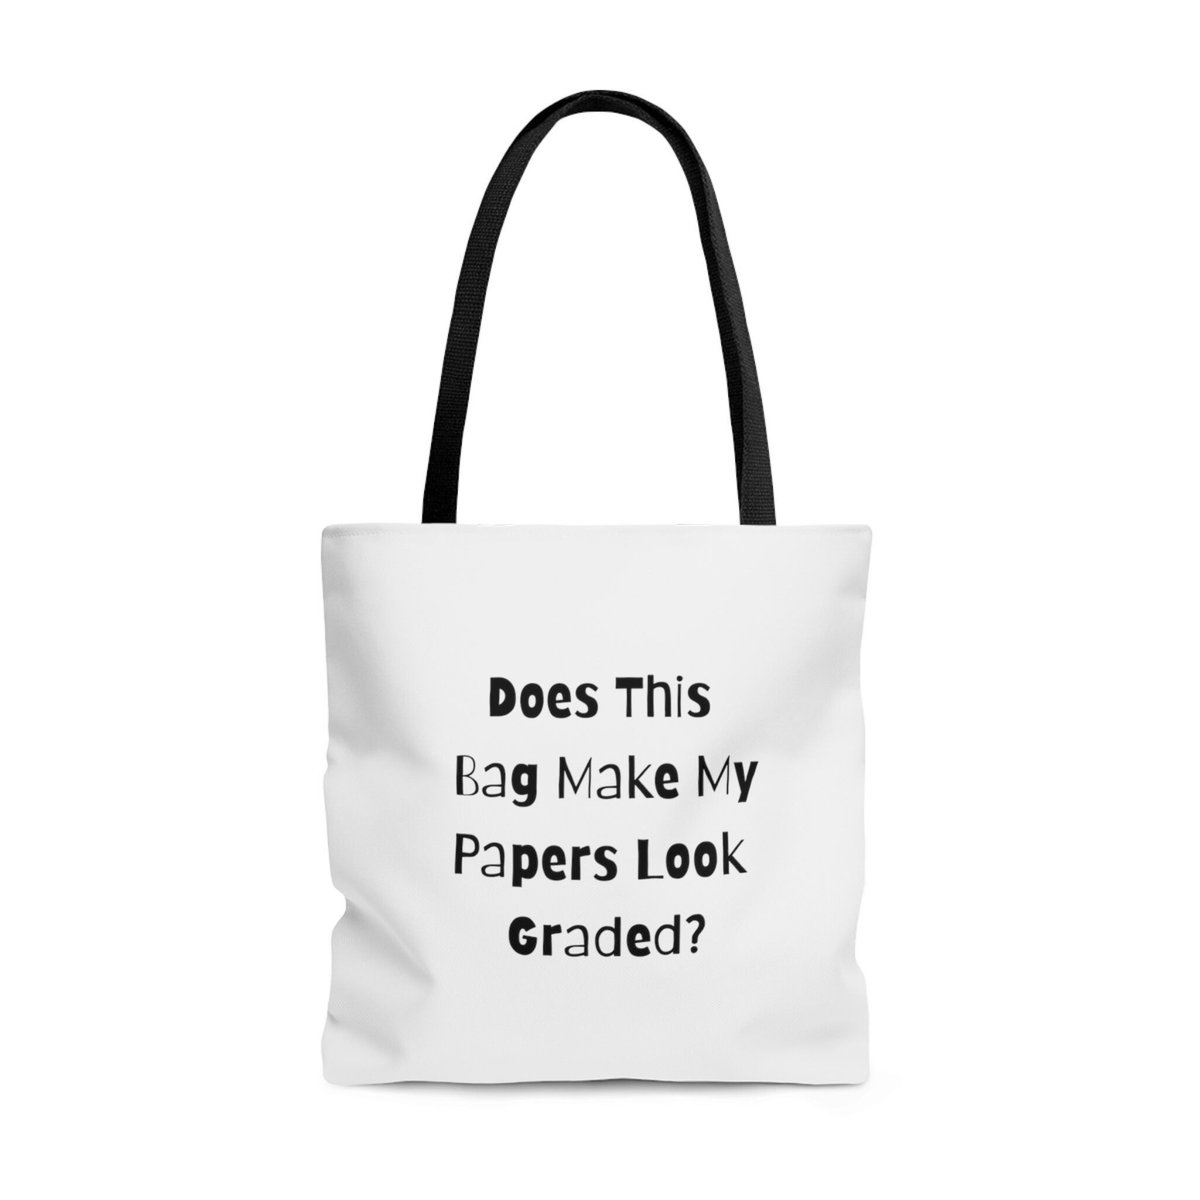 Teacher appreciation gift! #teacher #teacherbag #teachergift #giftforteacher #elementaryteacher #gradingpapers 

etsy.com/listing/150726…